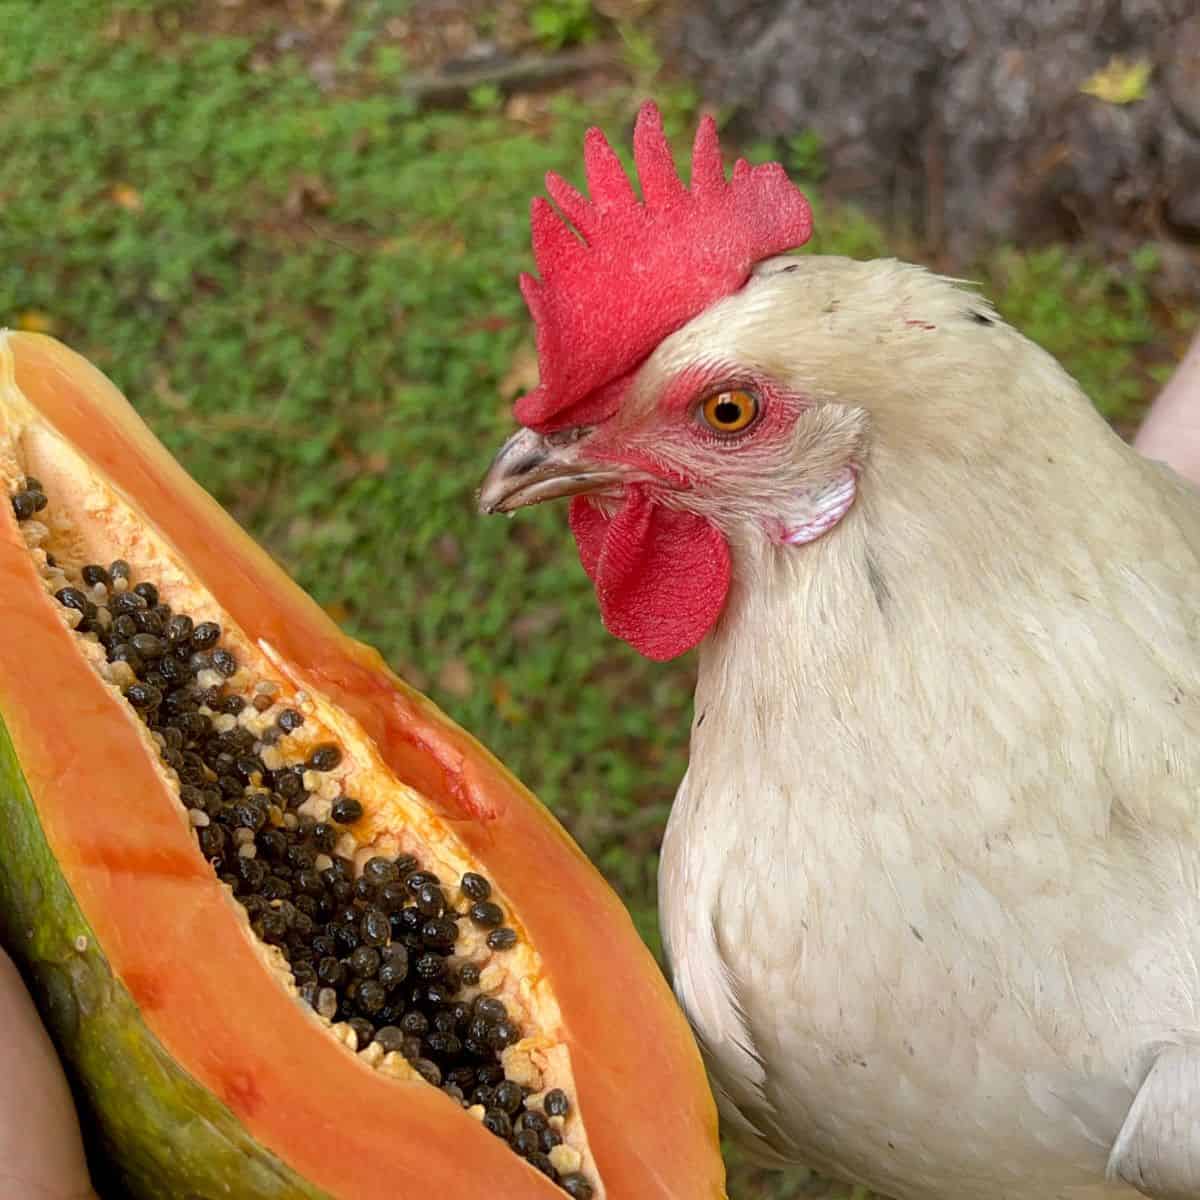 Chicken being held next to half of a papaya.